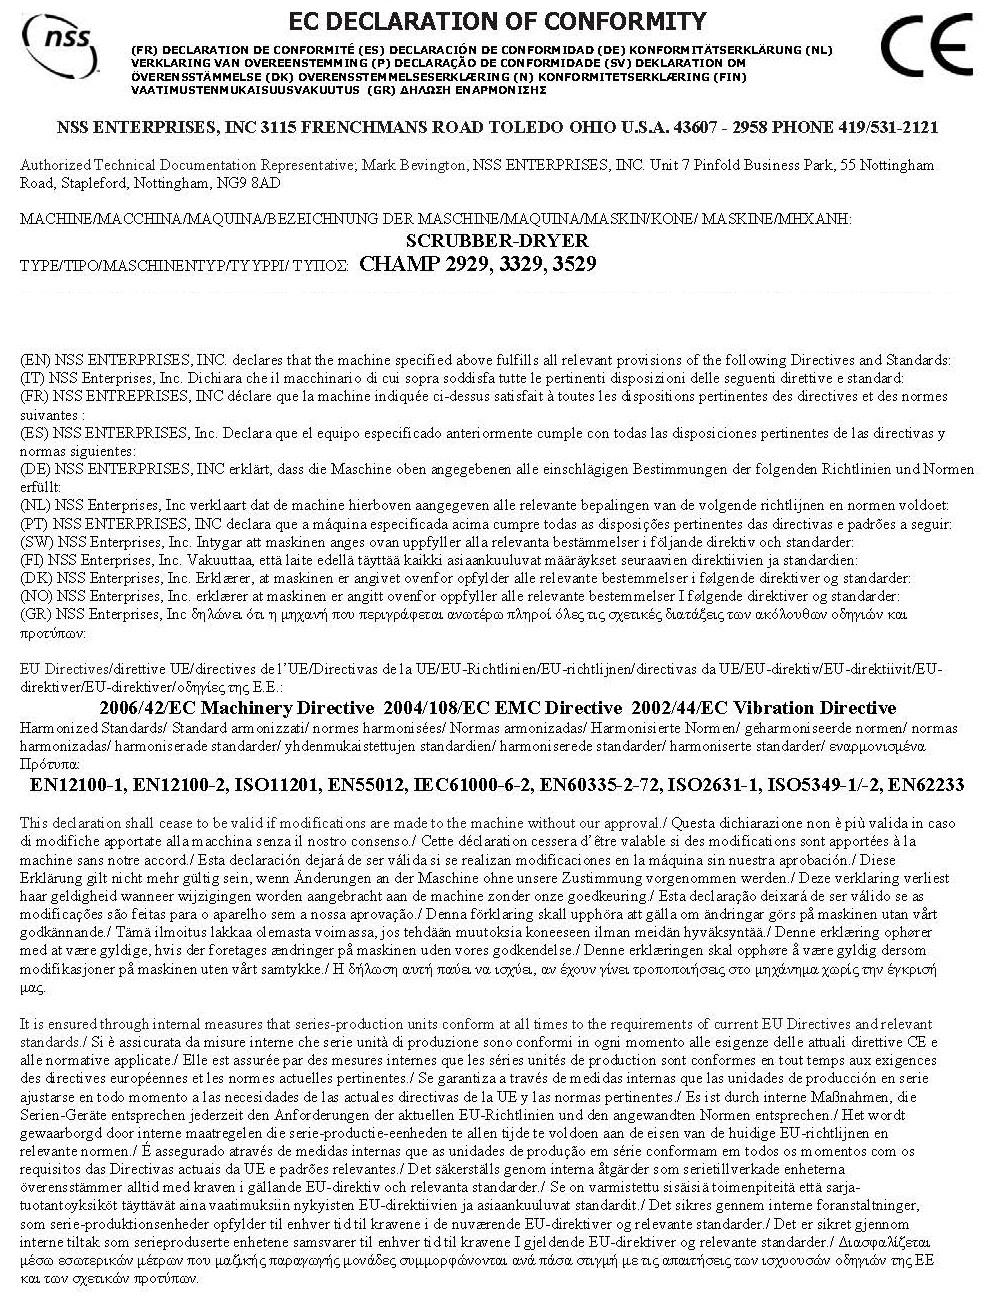 CHAMP 3329 Operation Manual - 9097632 - Orig. 02-05 Rev J 07-14 NSS Enterprises, Inc.